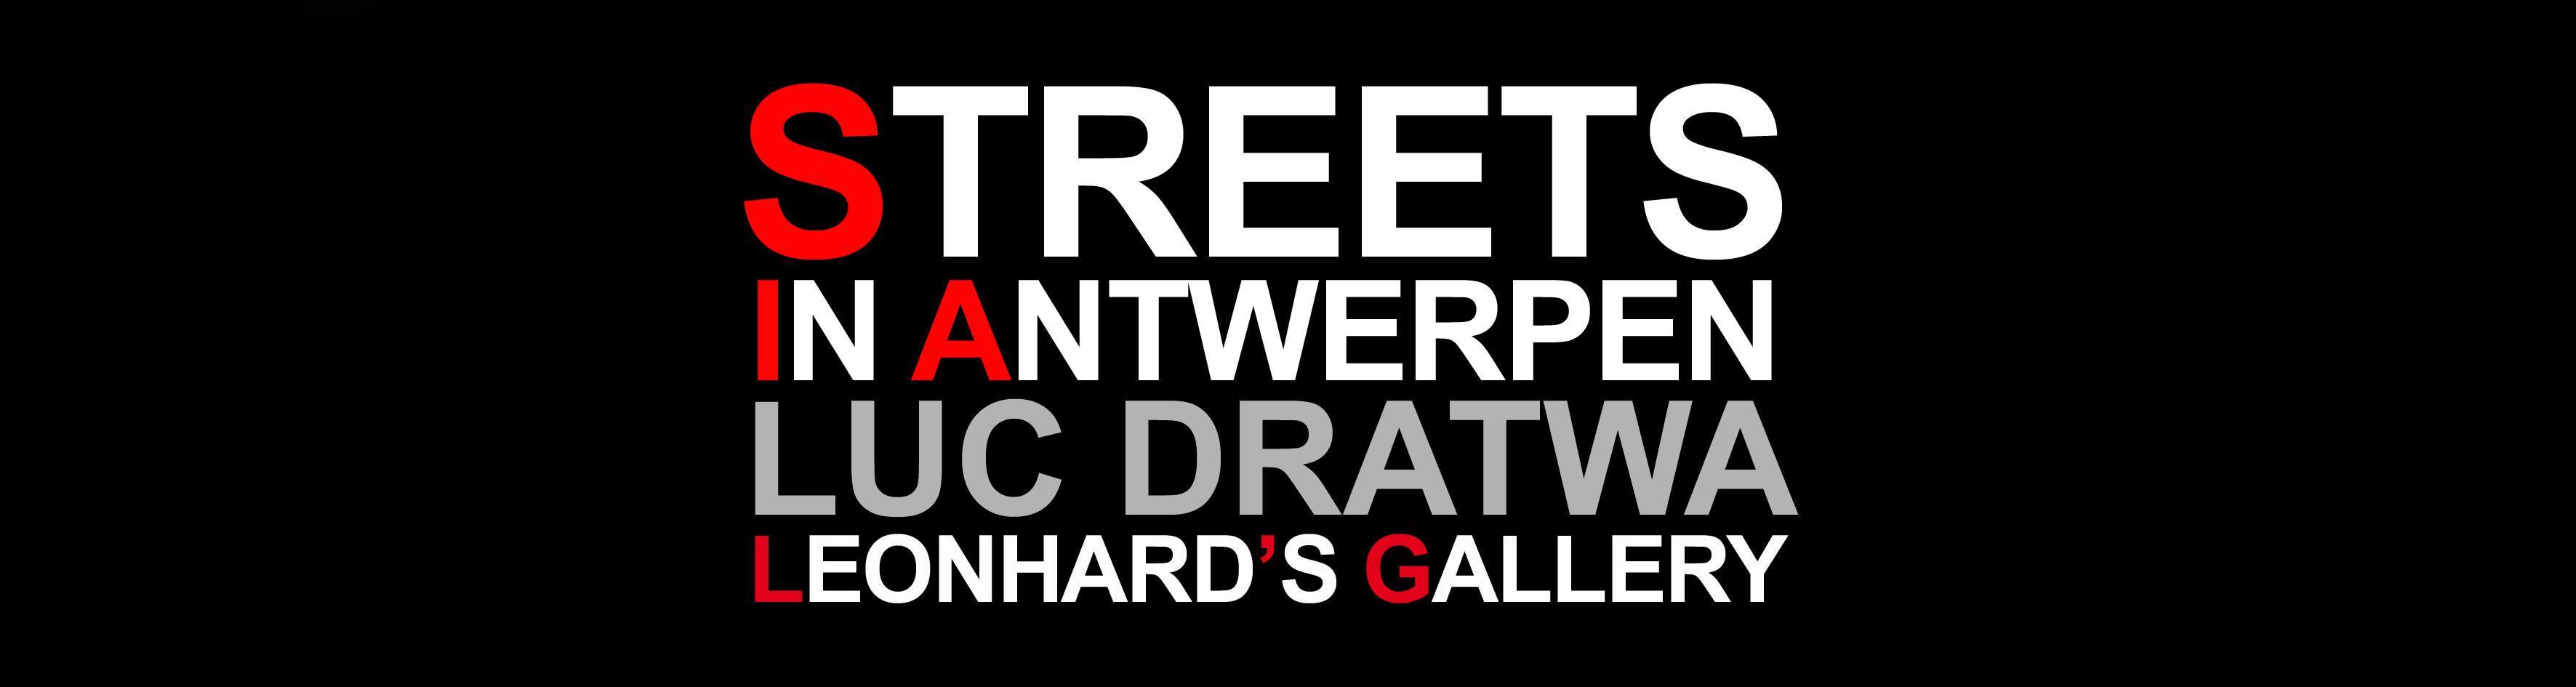 Luc Dratwa - Streets - expo - Leonhard's Gallery